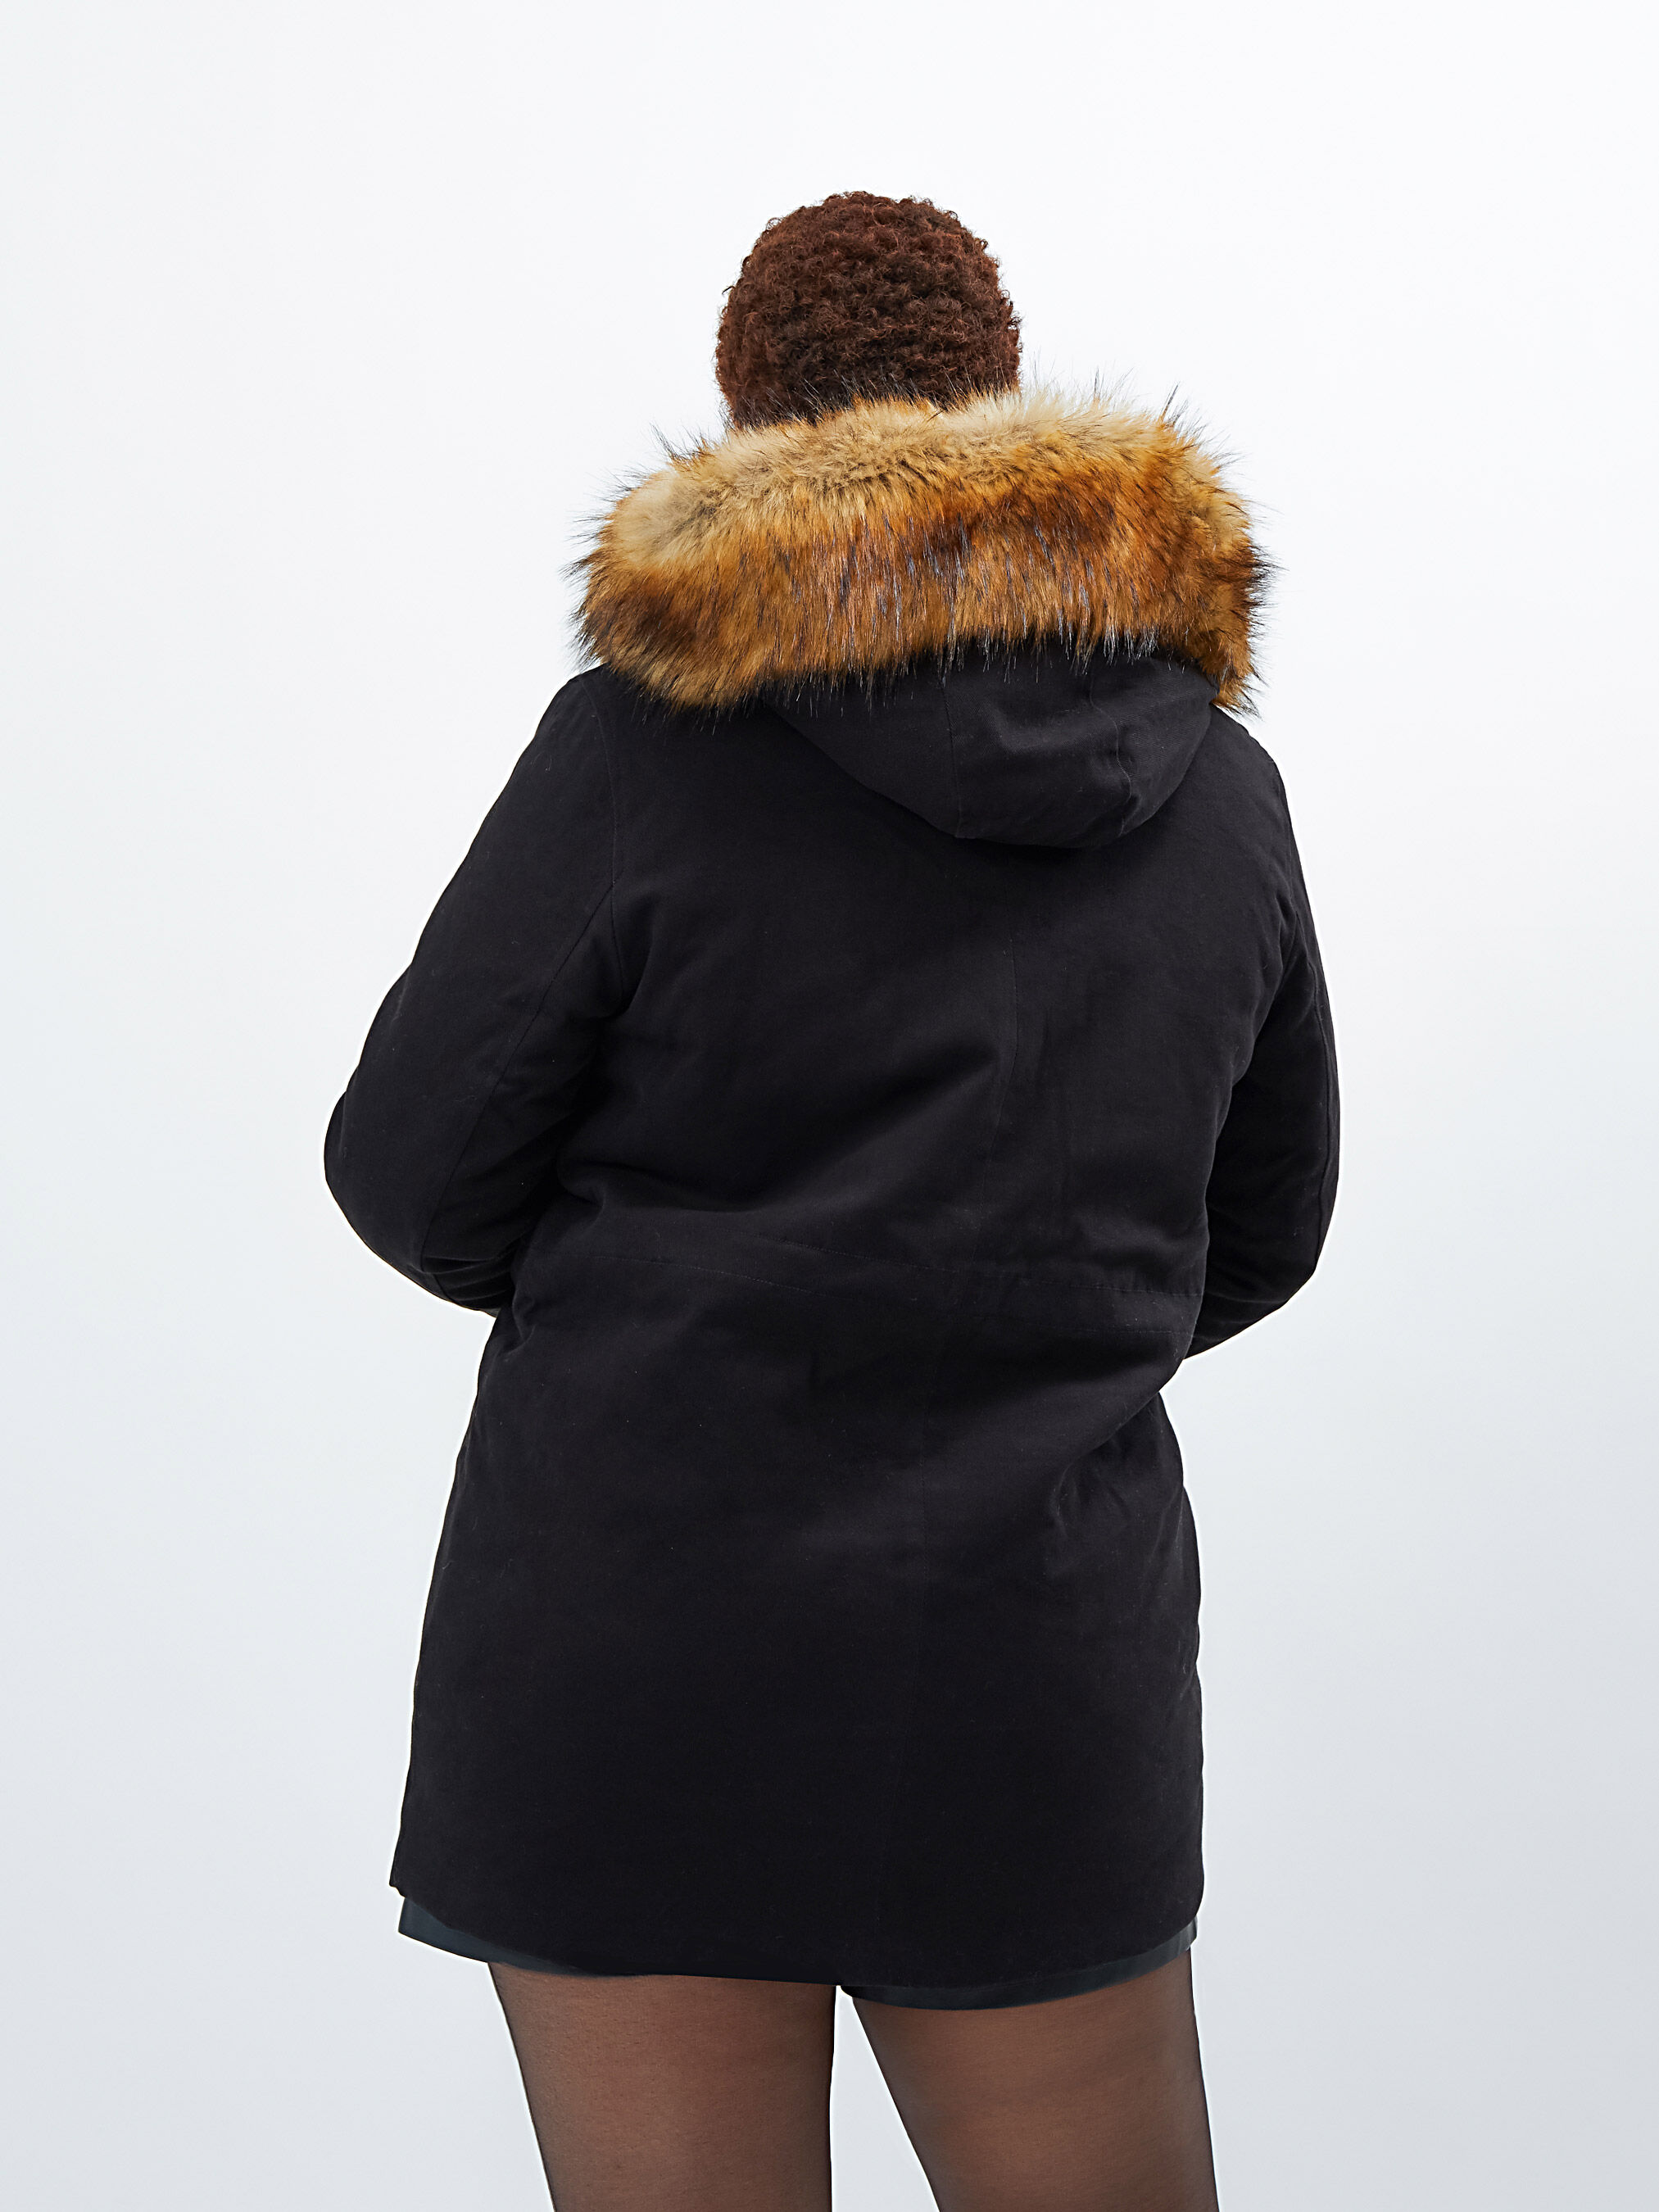 I.Code black fur-lined duffle coat-style parka